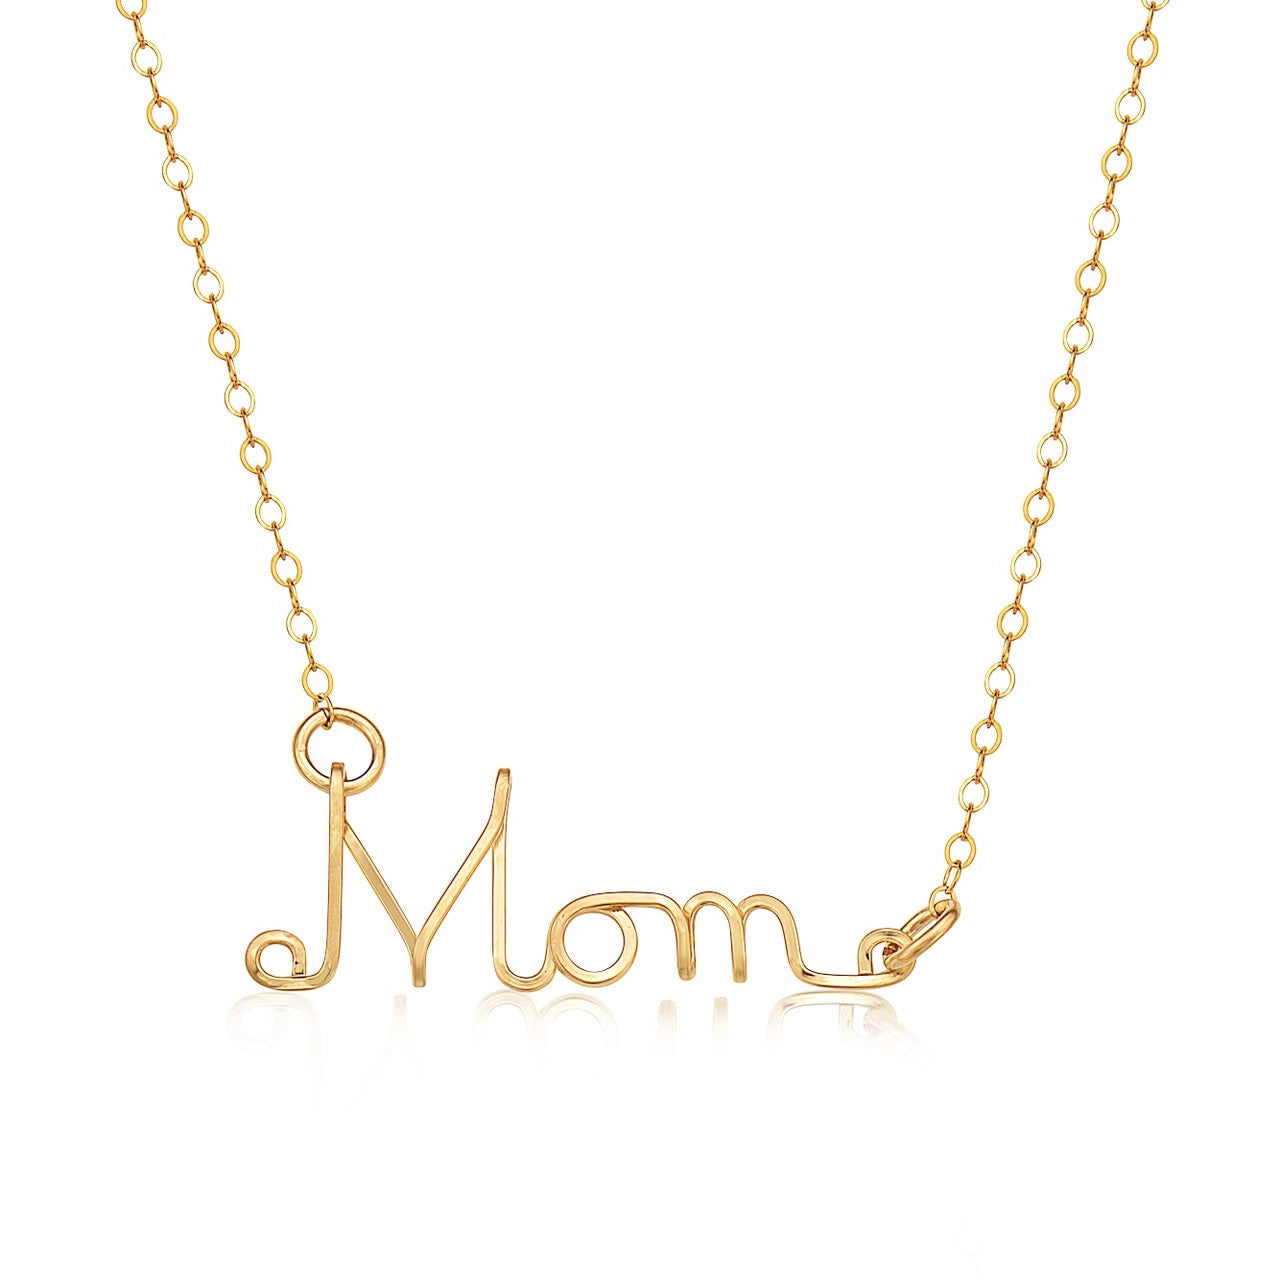 Ronaldo Jewelry: Name Necklace "Mama"